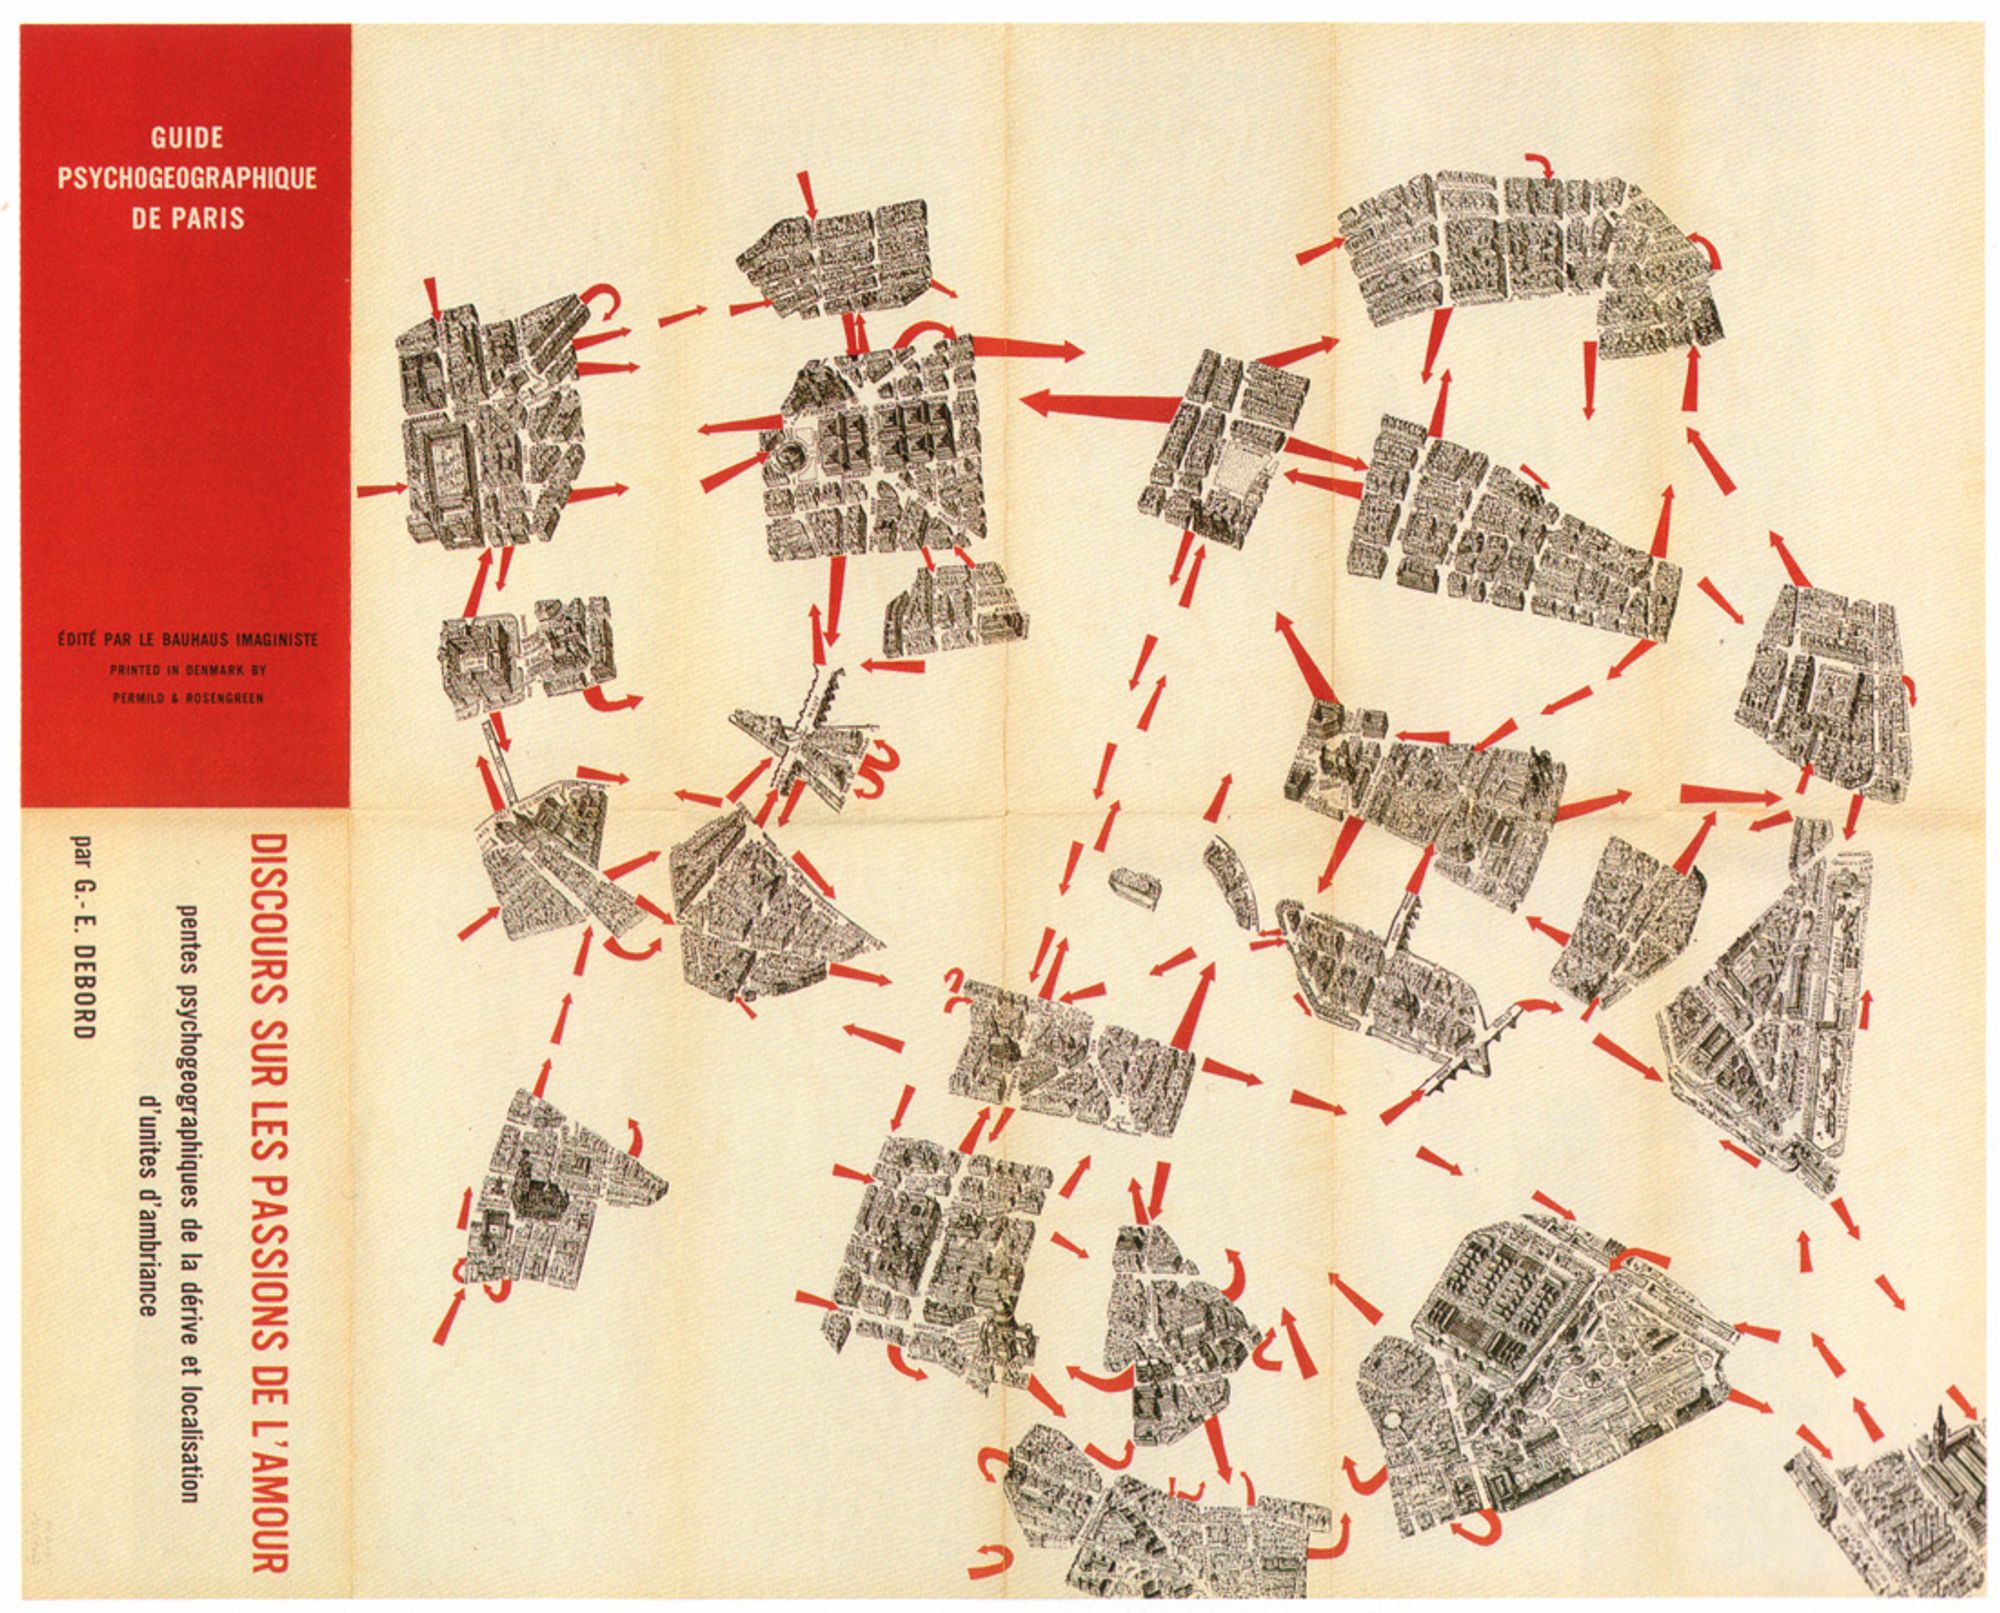 "Psychogeographic guide of Paris," Guy Debord, 1955 (